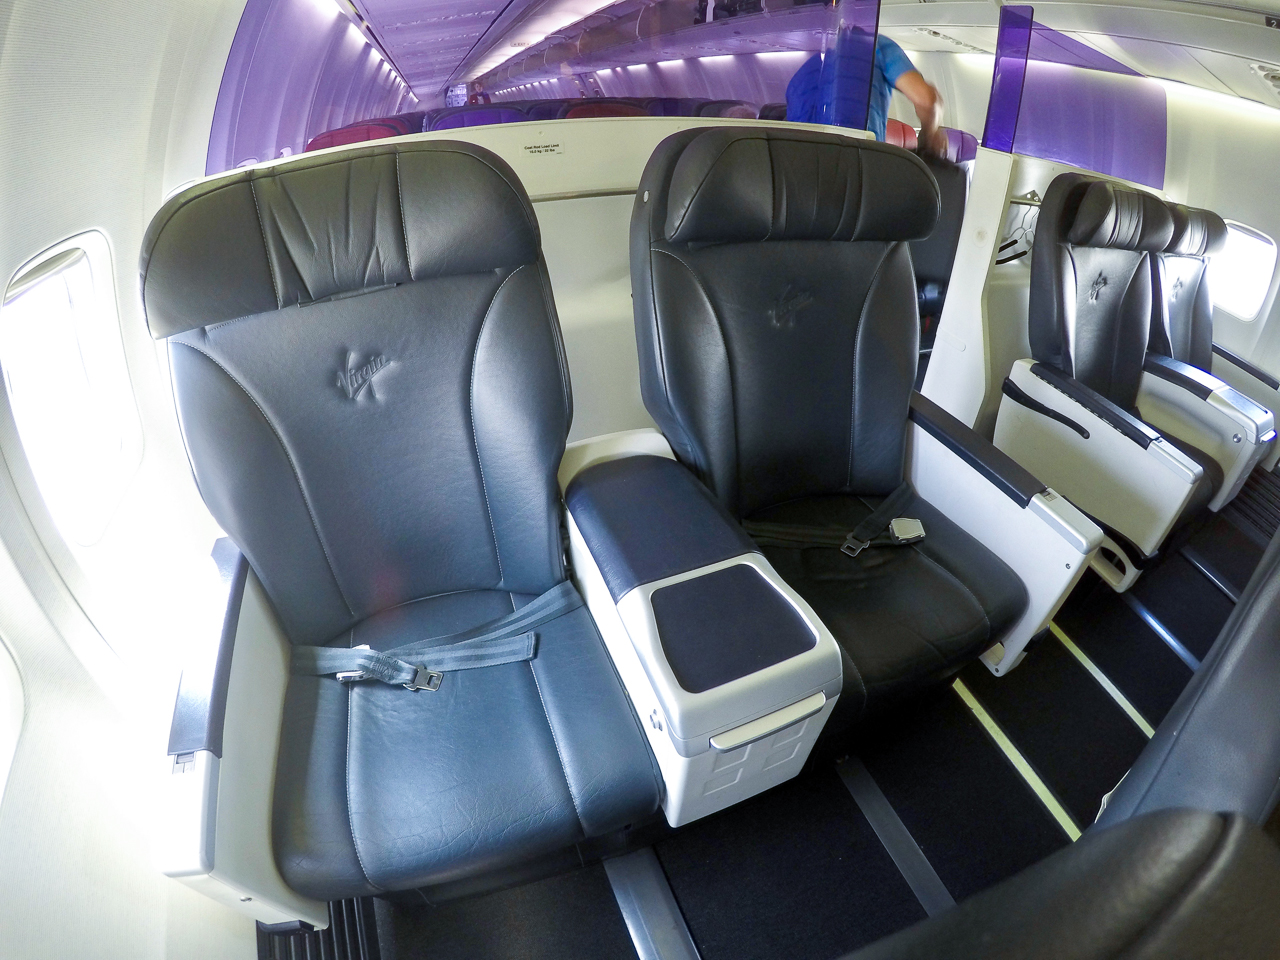 Virgin Australia Boeing 737 Business Class seats